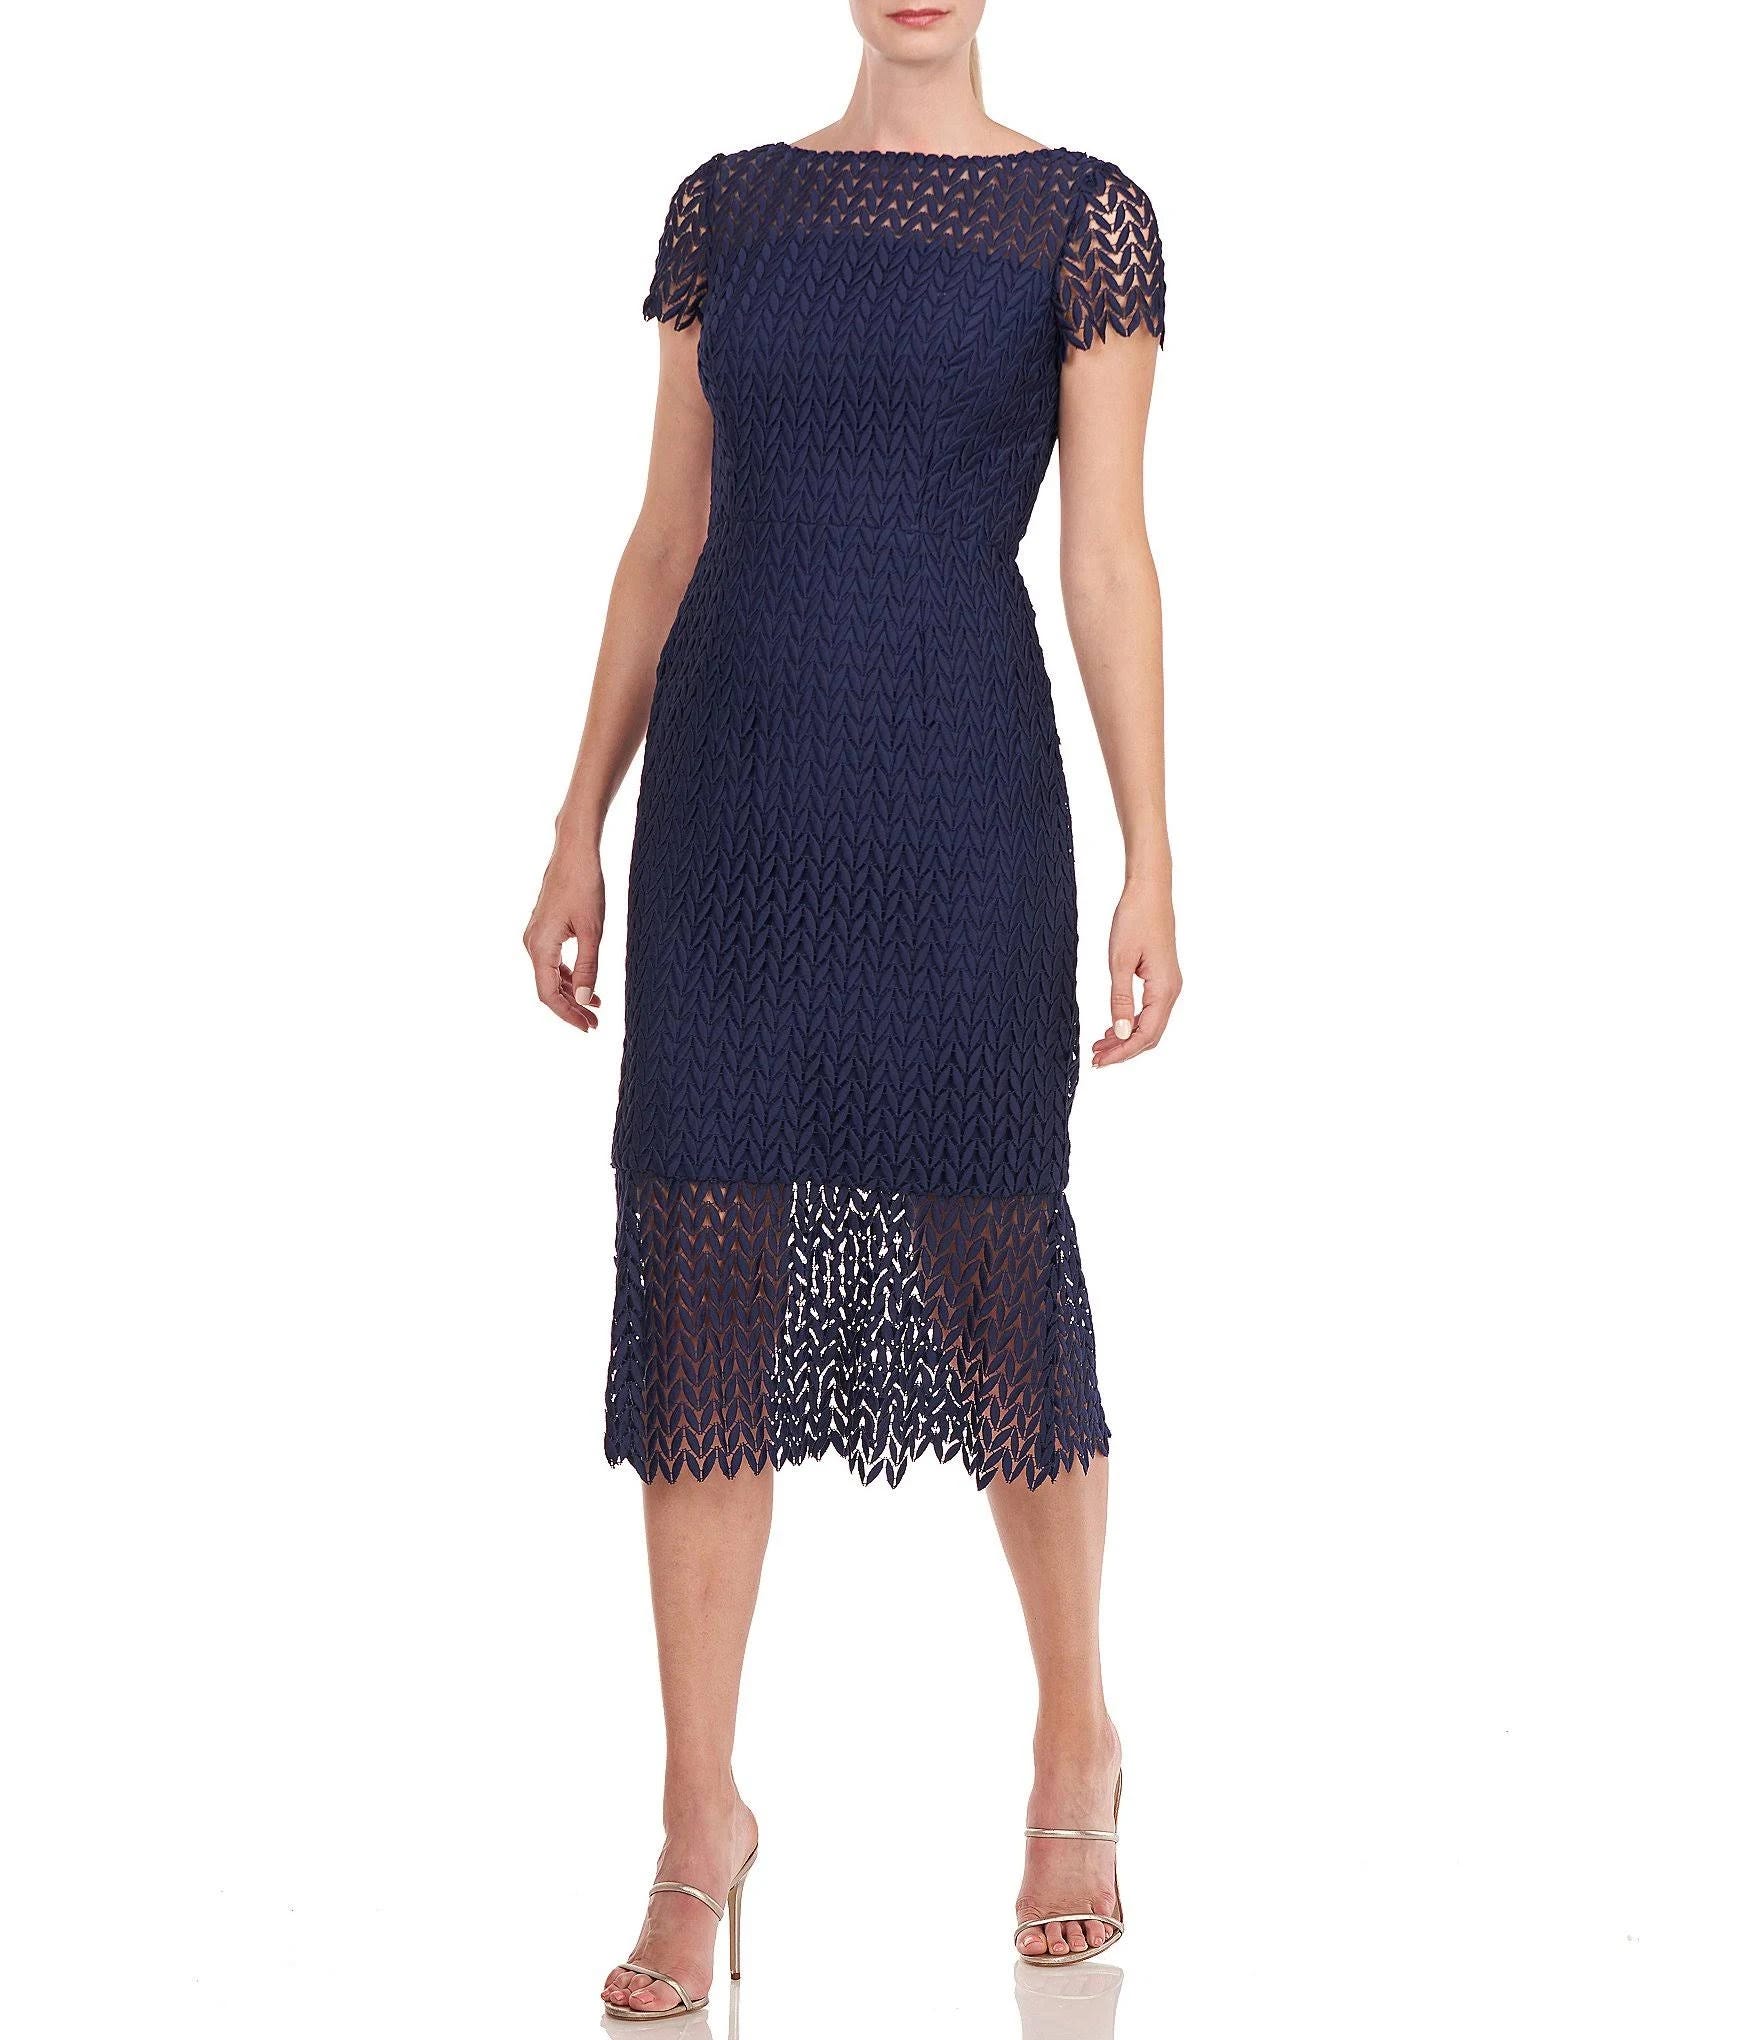 Kay Unger's Lace Sheath Dress - Midi Maternity Fit (Size 12) | Image